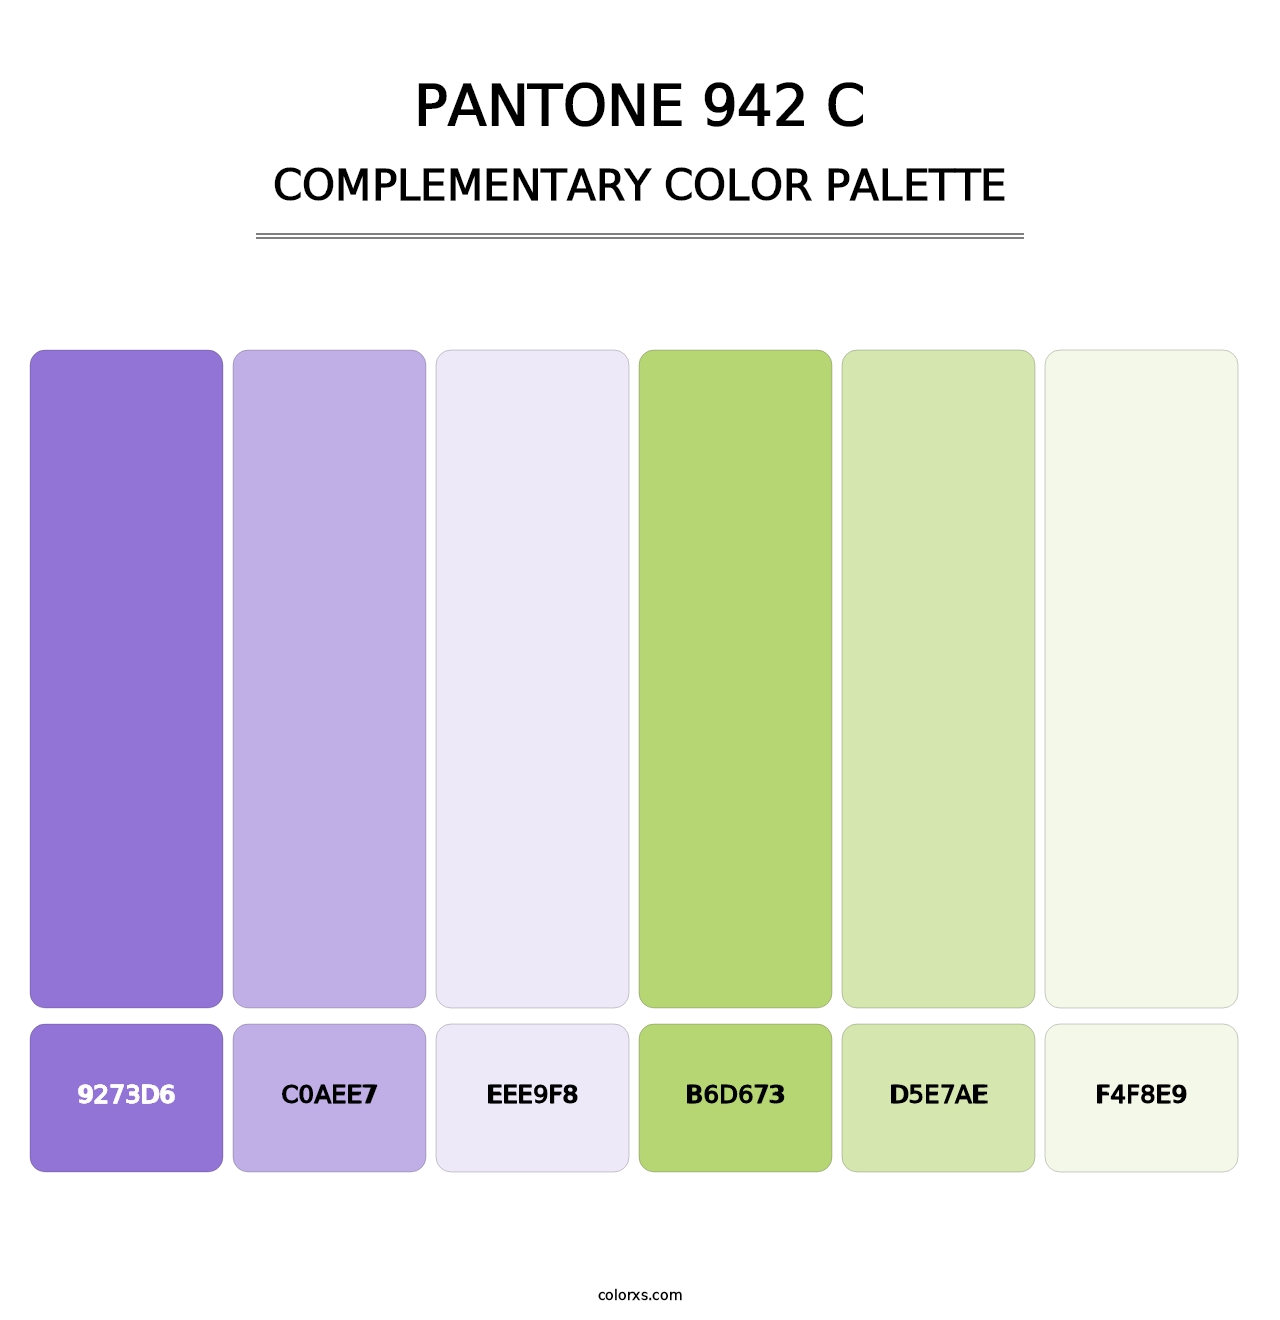 PANTONE 942 C - Complementary Color Palette